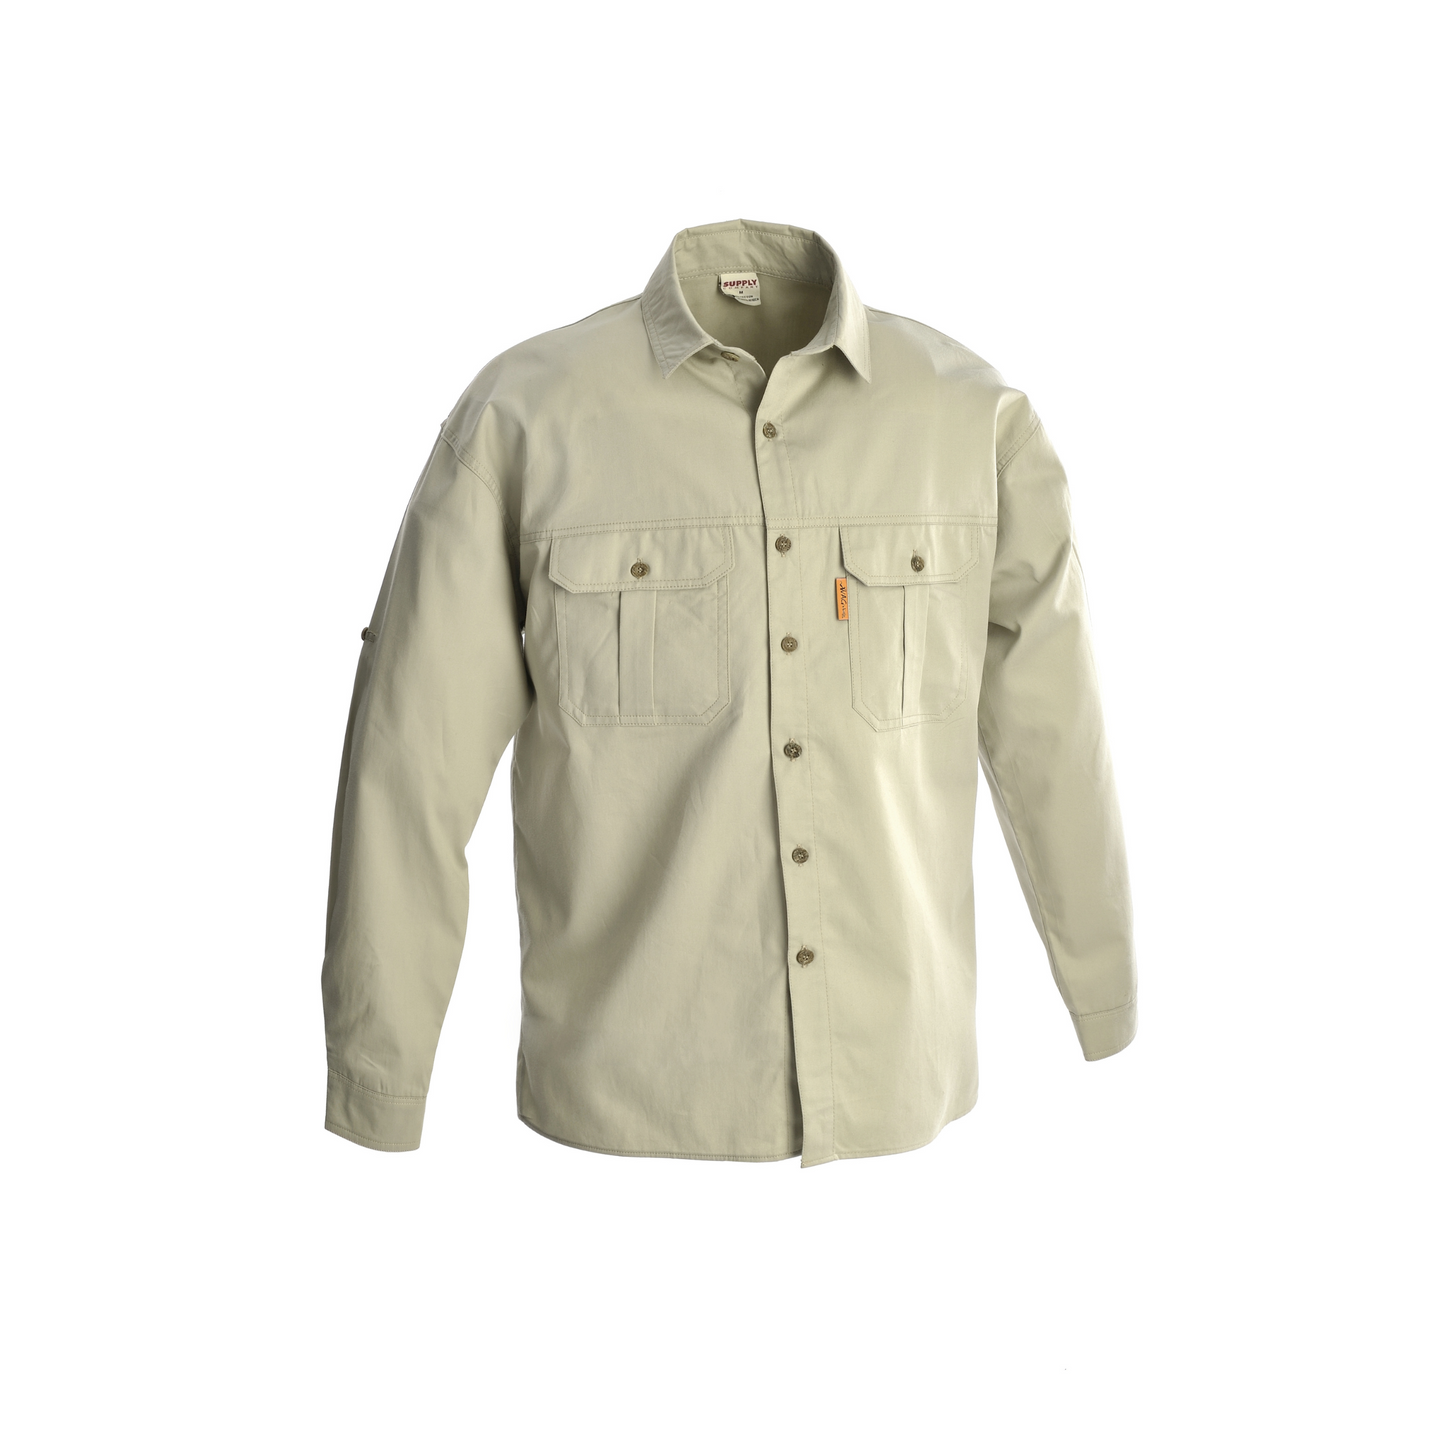 Ruggedwear - Crocodile - Long Sleeve Khaki / Stone Shirt